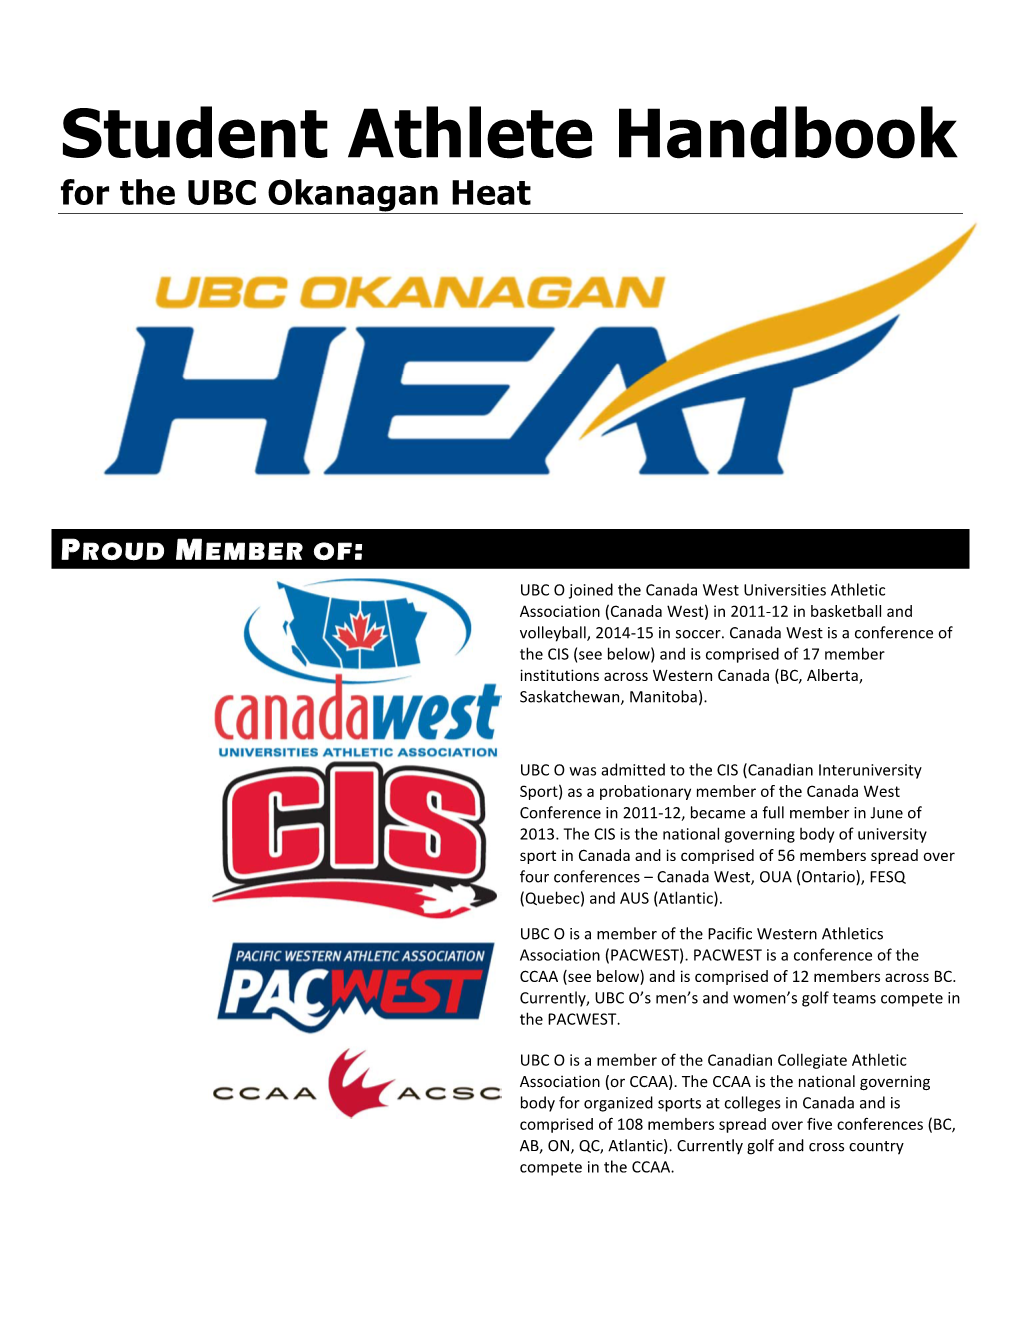 Student Athlete Handbook for the UBC Okanagan Heat